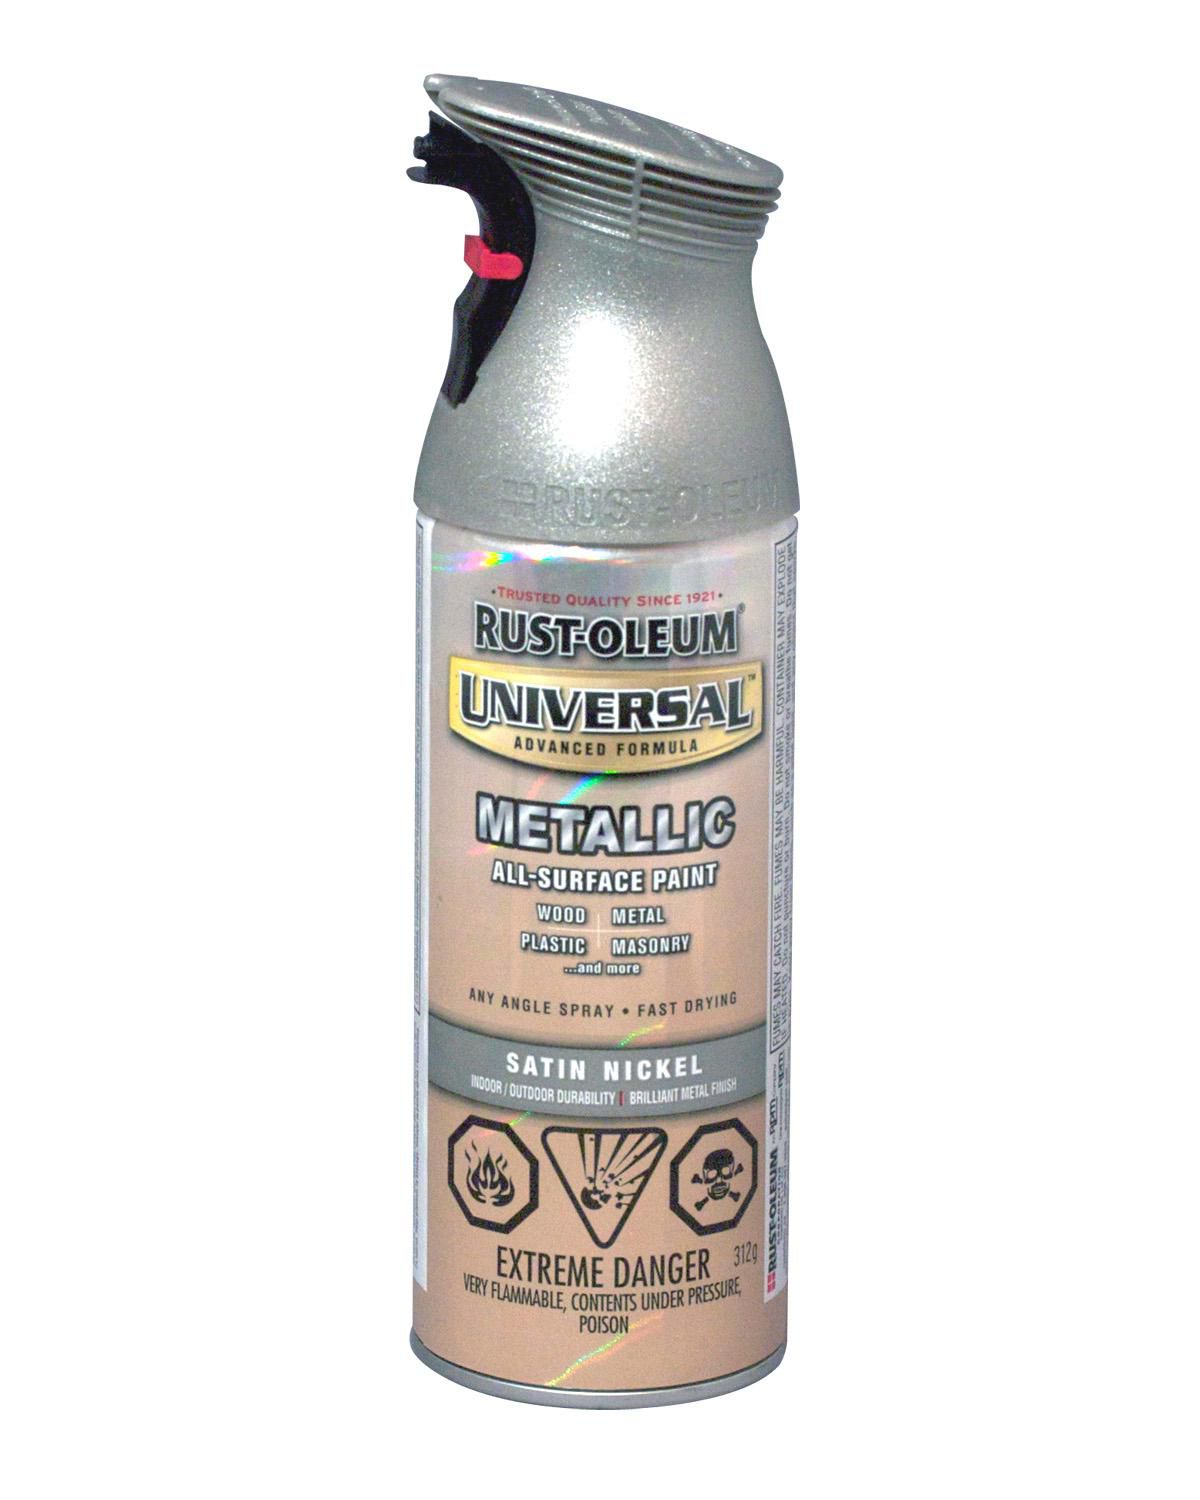 Rust-Oleum Universal Metallic Spray Paint in Antique Brass, 312 G